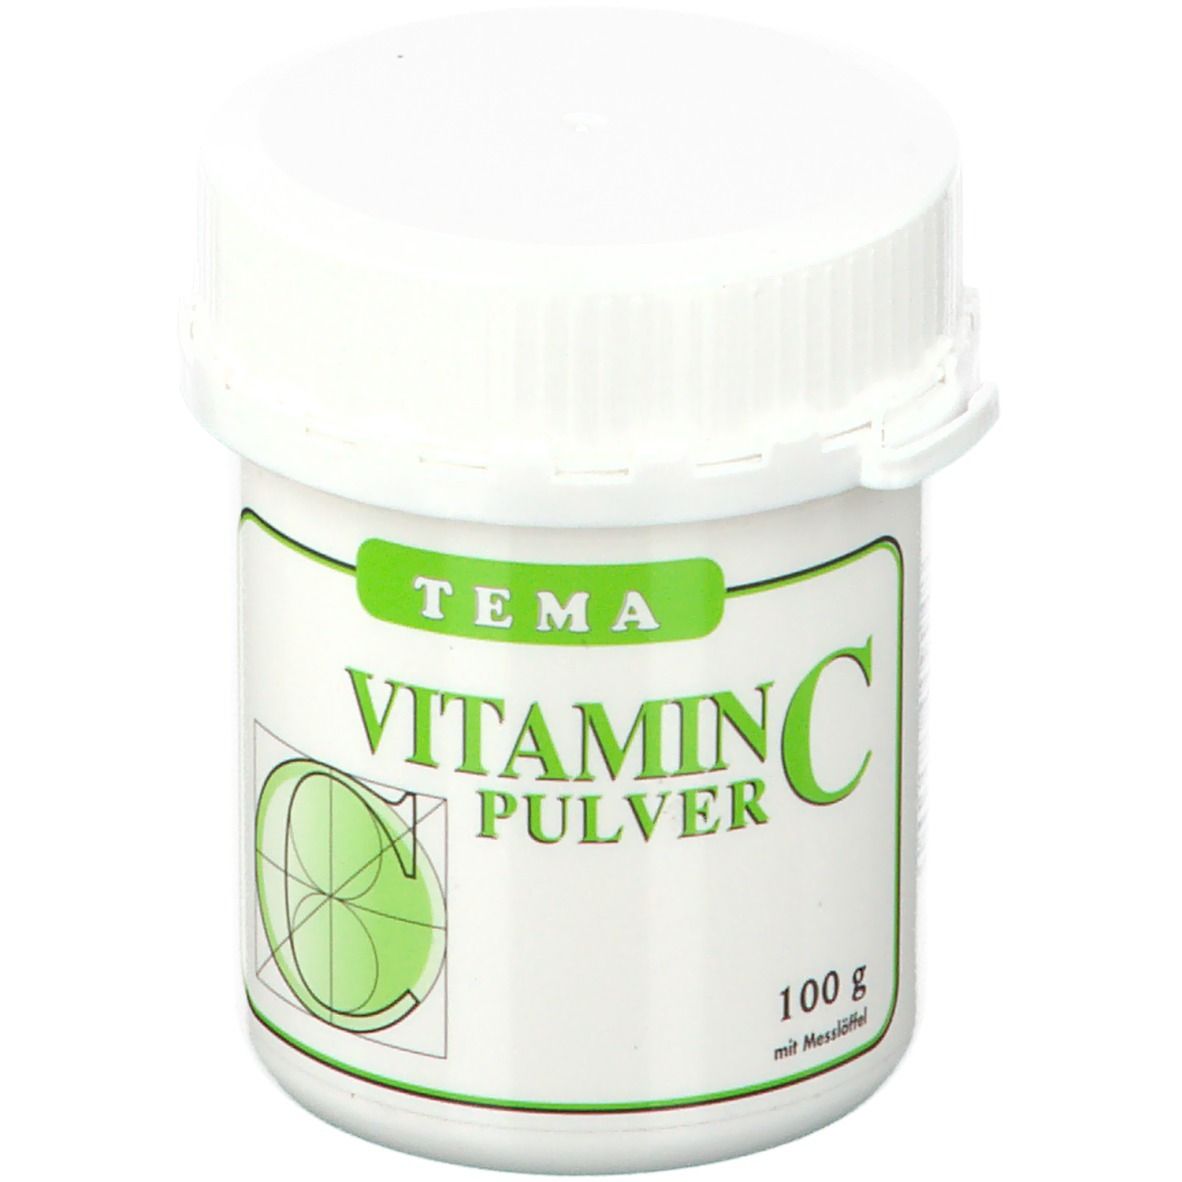 Image of TEMA Vitamin C Pulver